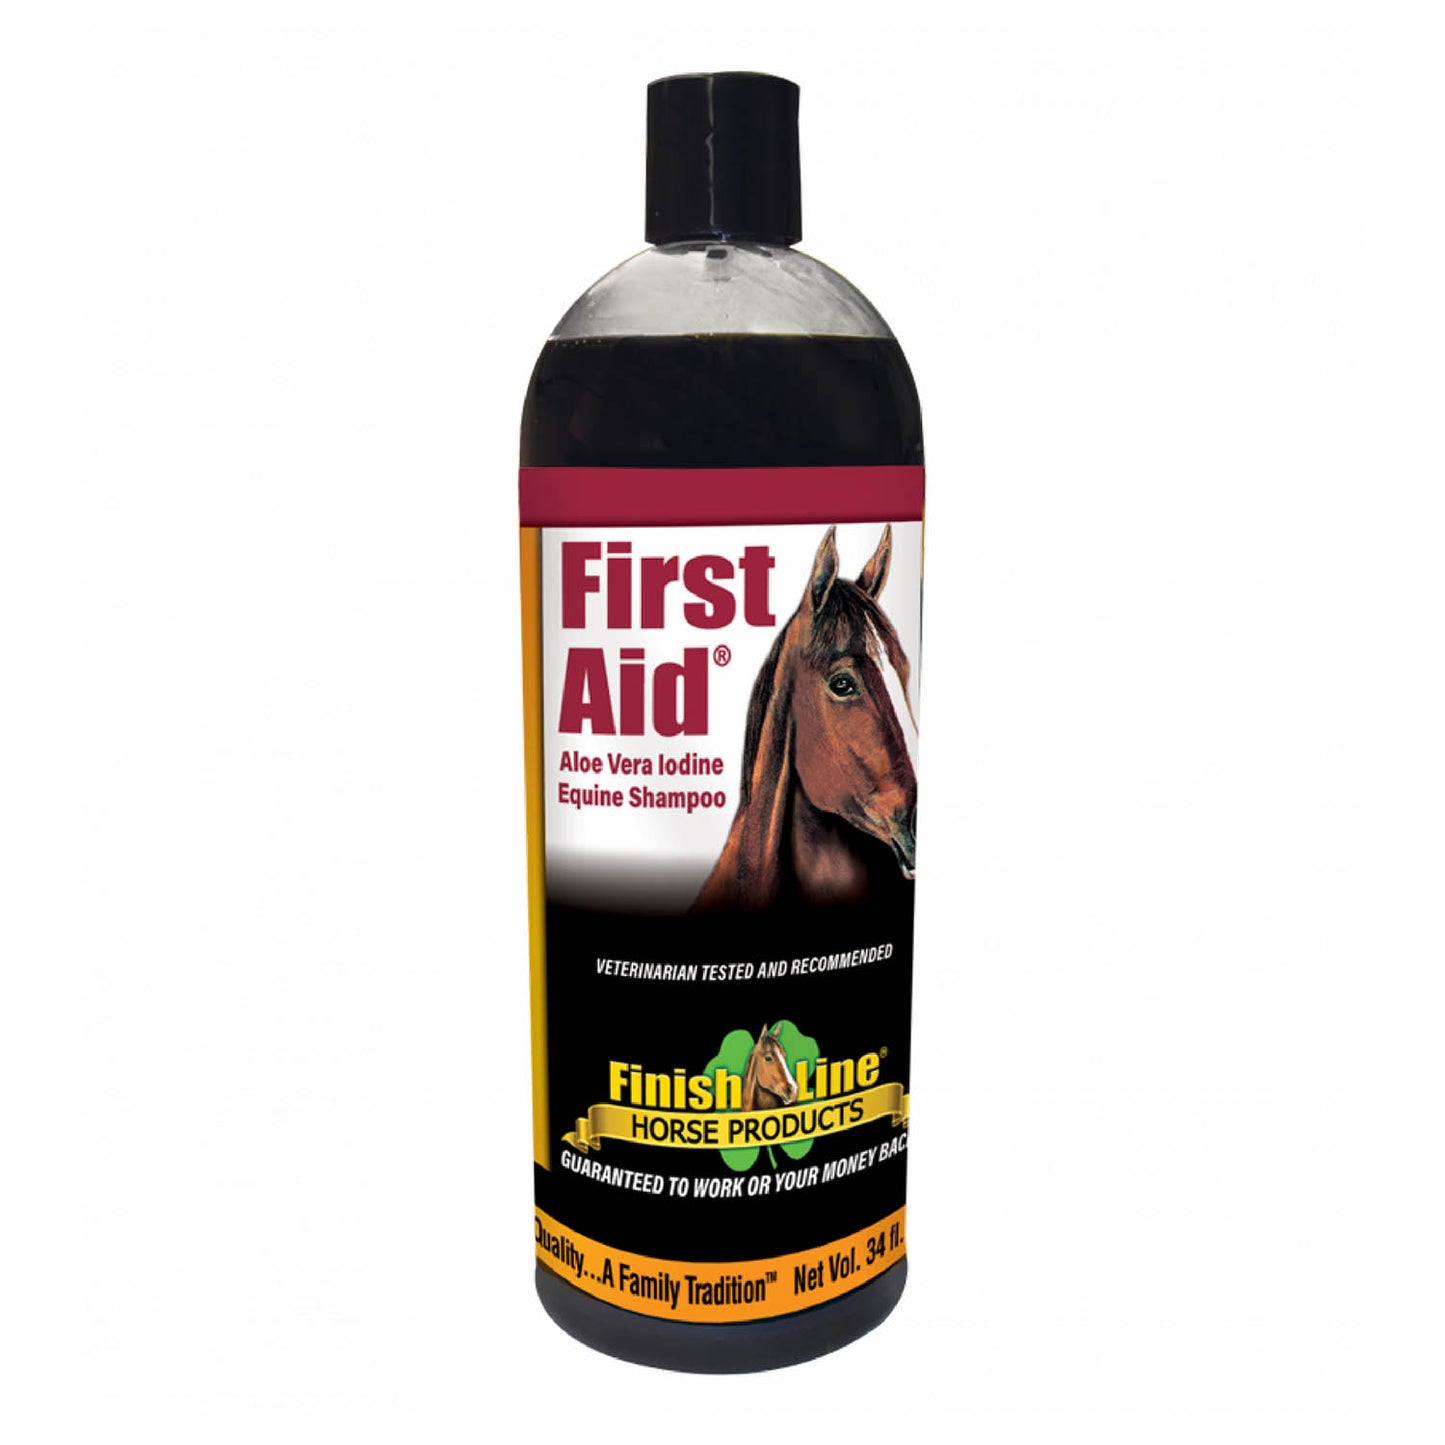 Equine shampoo- First Aid